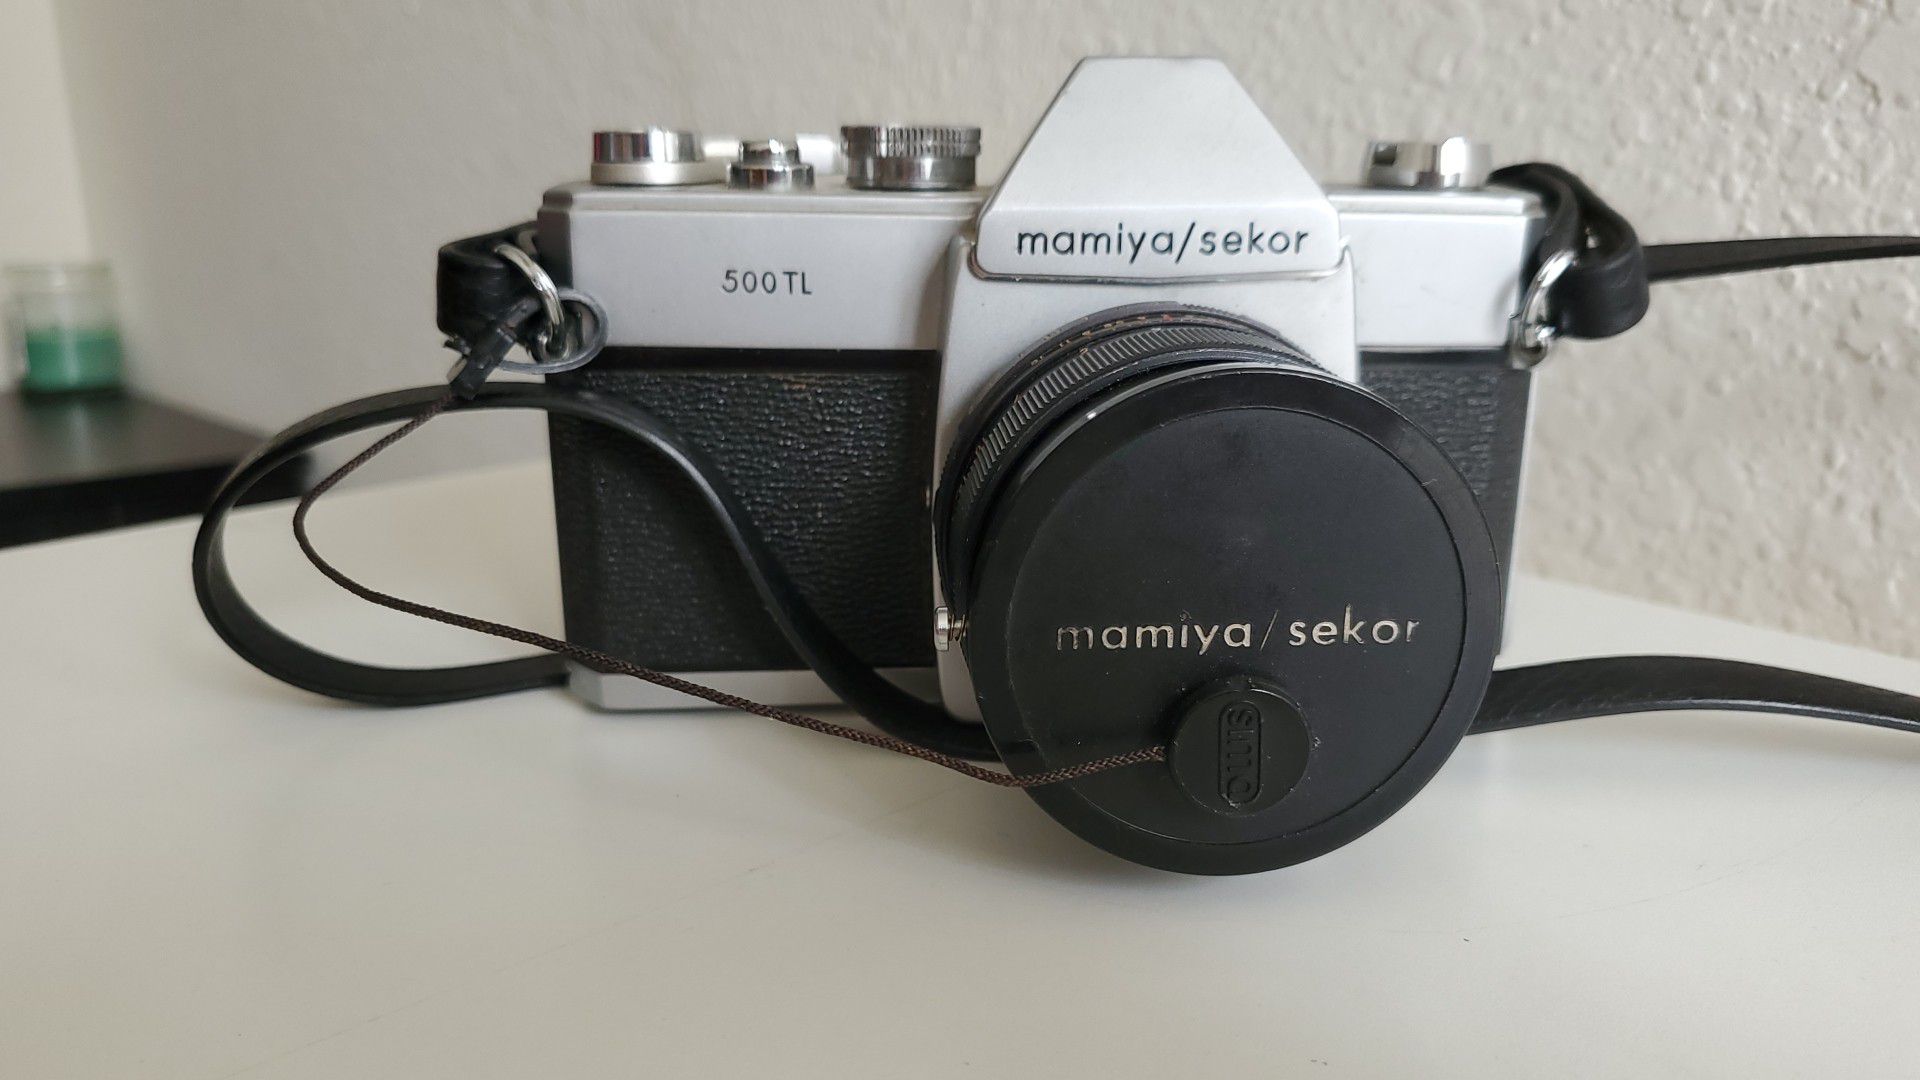 Mamiya/senor film camera